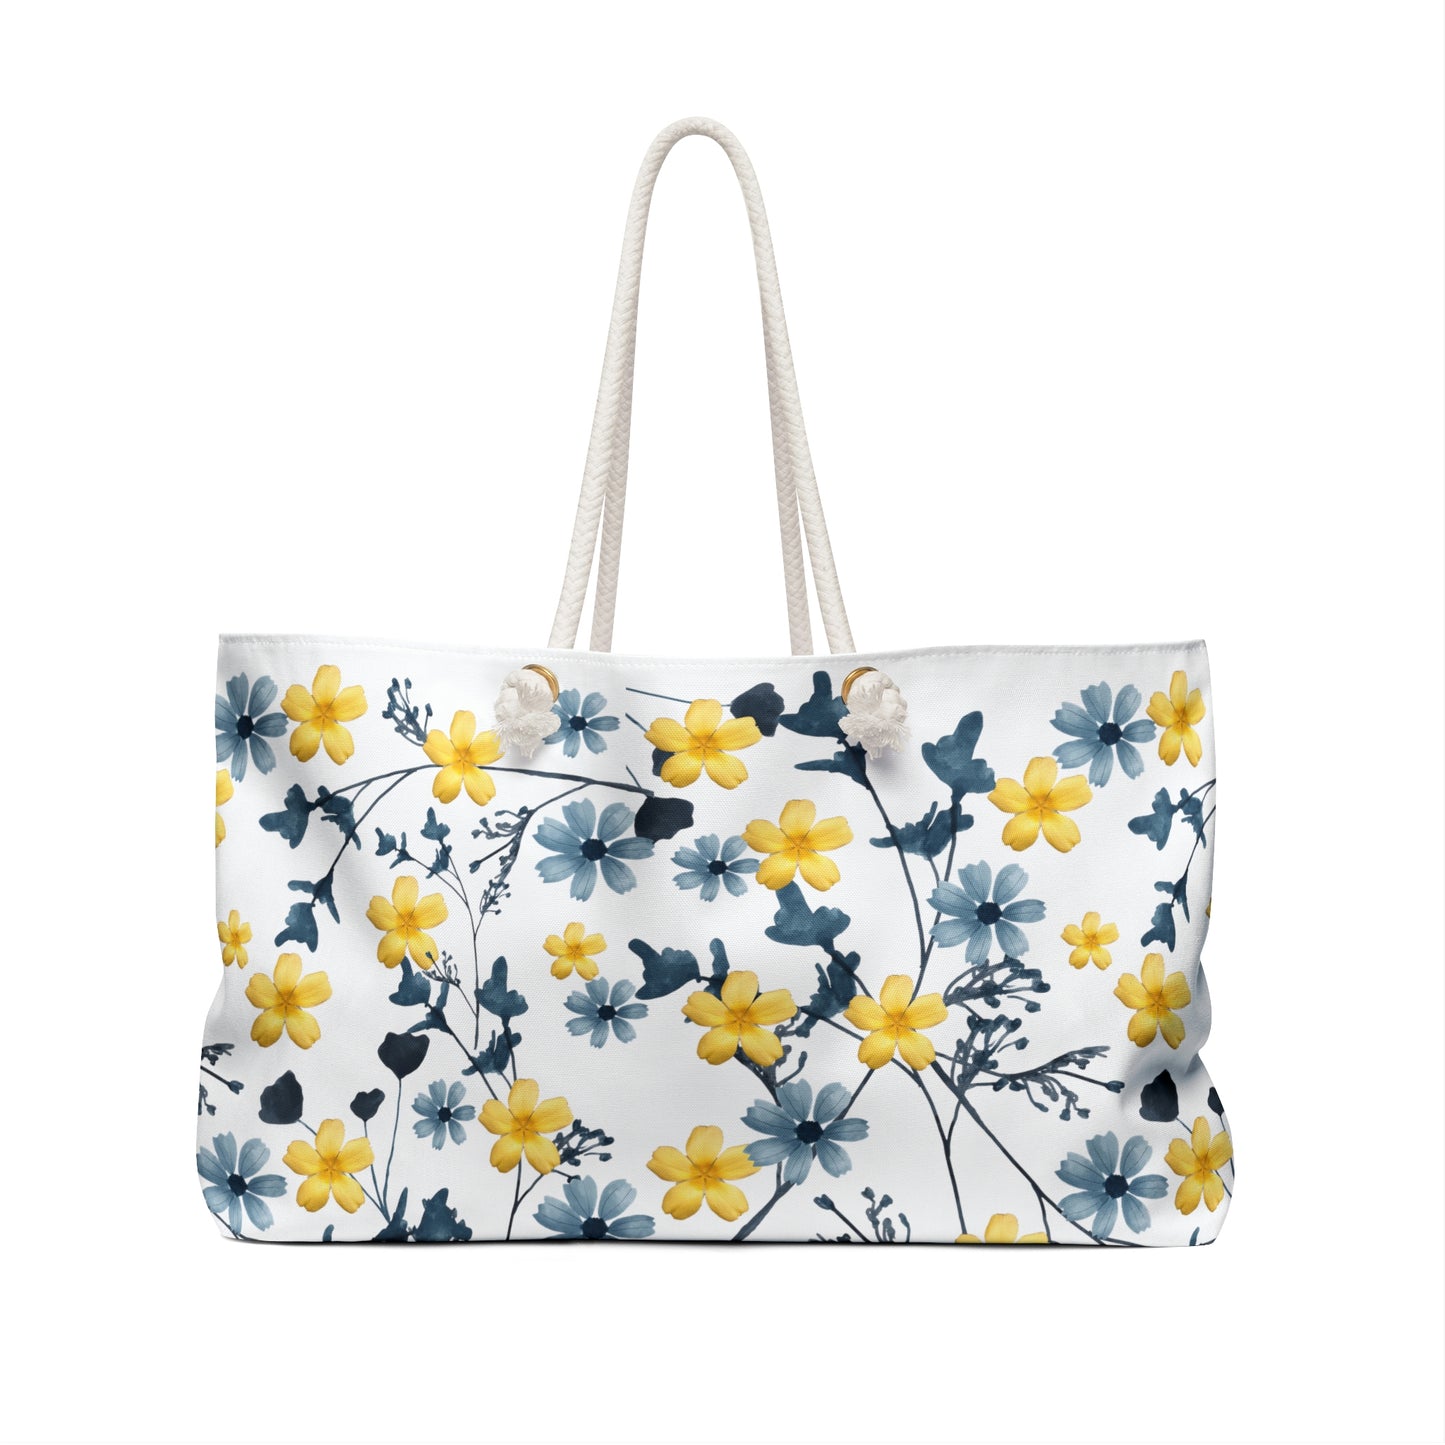 Spring Bag, Floral Weekender Bag, Yellow Flower Bag, Flower Overnight Bag, Navy Blue Tote Bag, Summer Beach Bag, Mother's Day Gift,